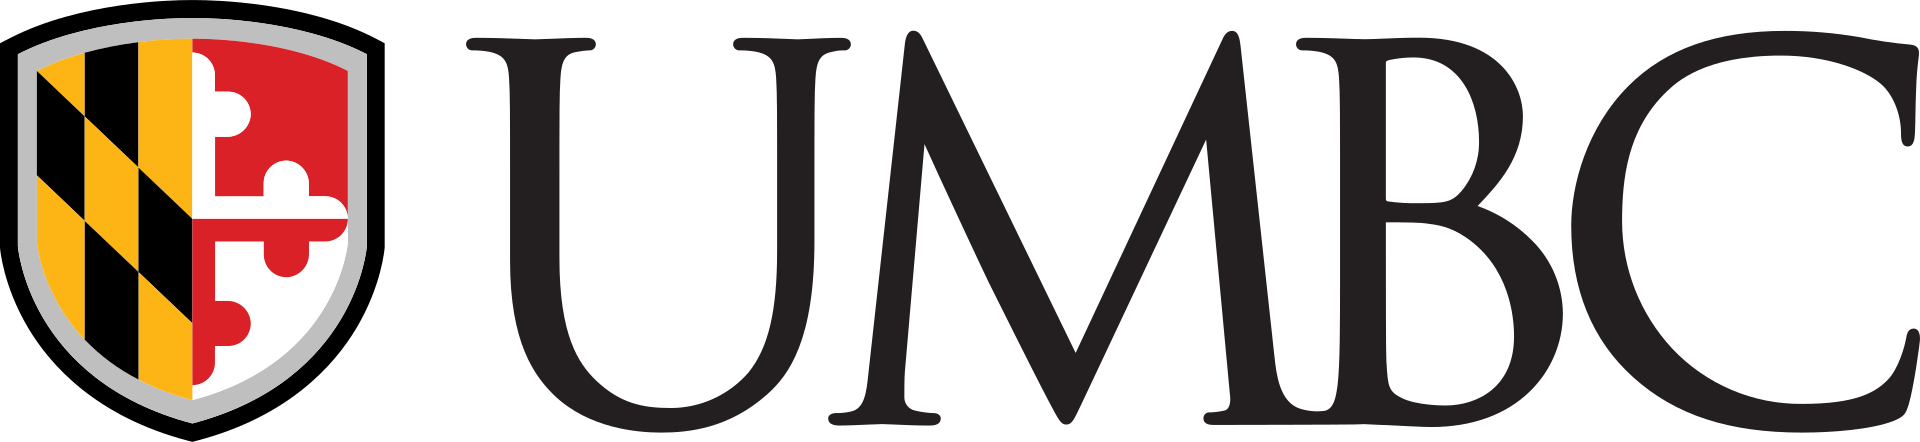 University of Maryland, Baltimore County (UMBC) logo, By University of Maryland, Baltimore County - http://styleguide.umbc.edu/logos/, Public Domain, http://commons.wikimedia.org/w/index.php?curid=67684930"